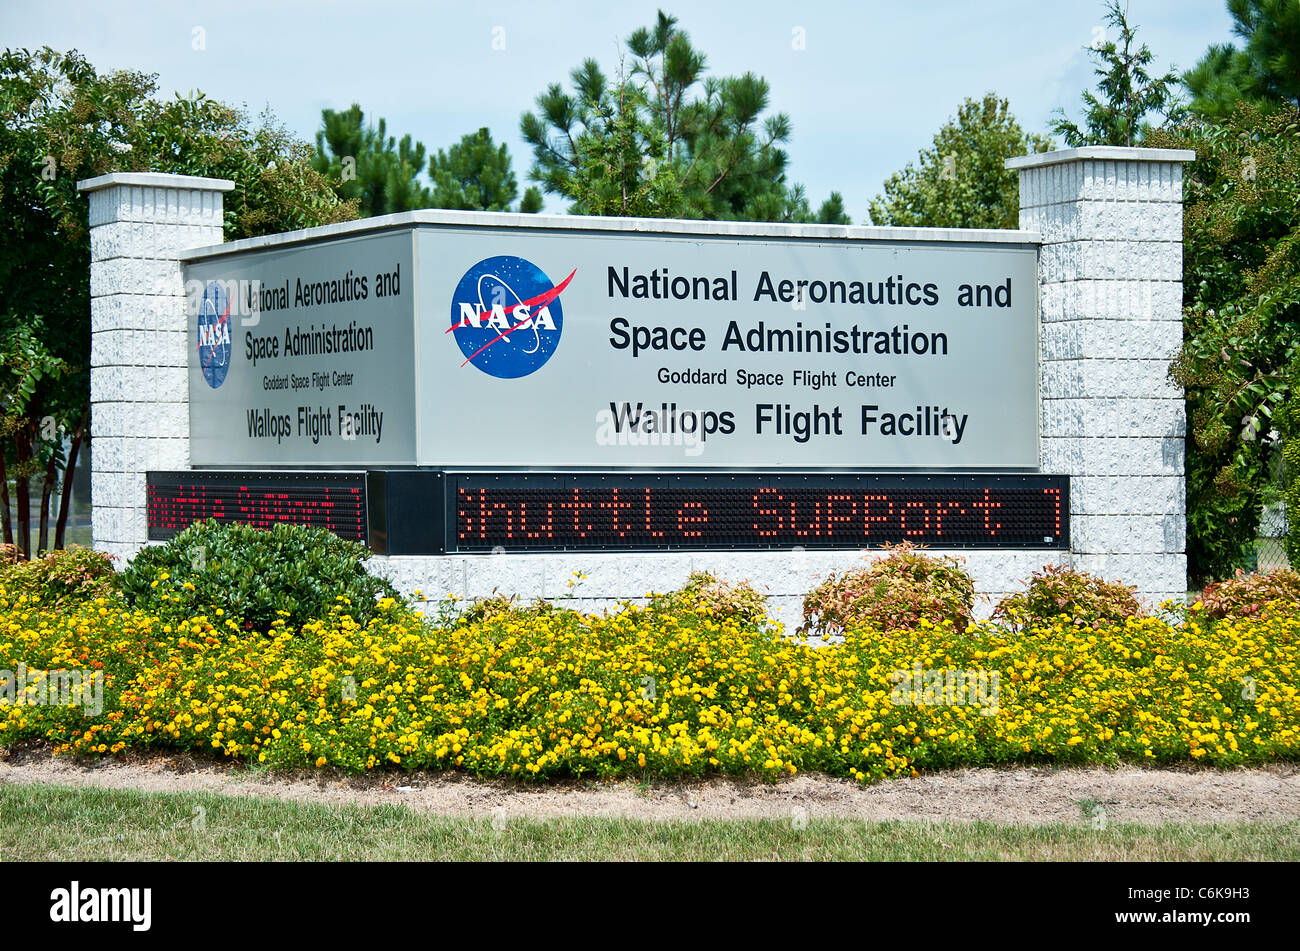 La NASA Goddard Space Flight Center wallops flight facility, wallops, Virginia, Stati Uniti d'America Foto Stock